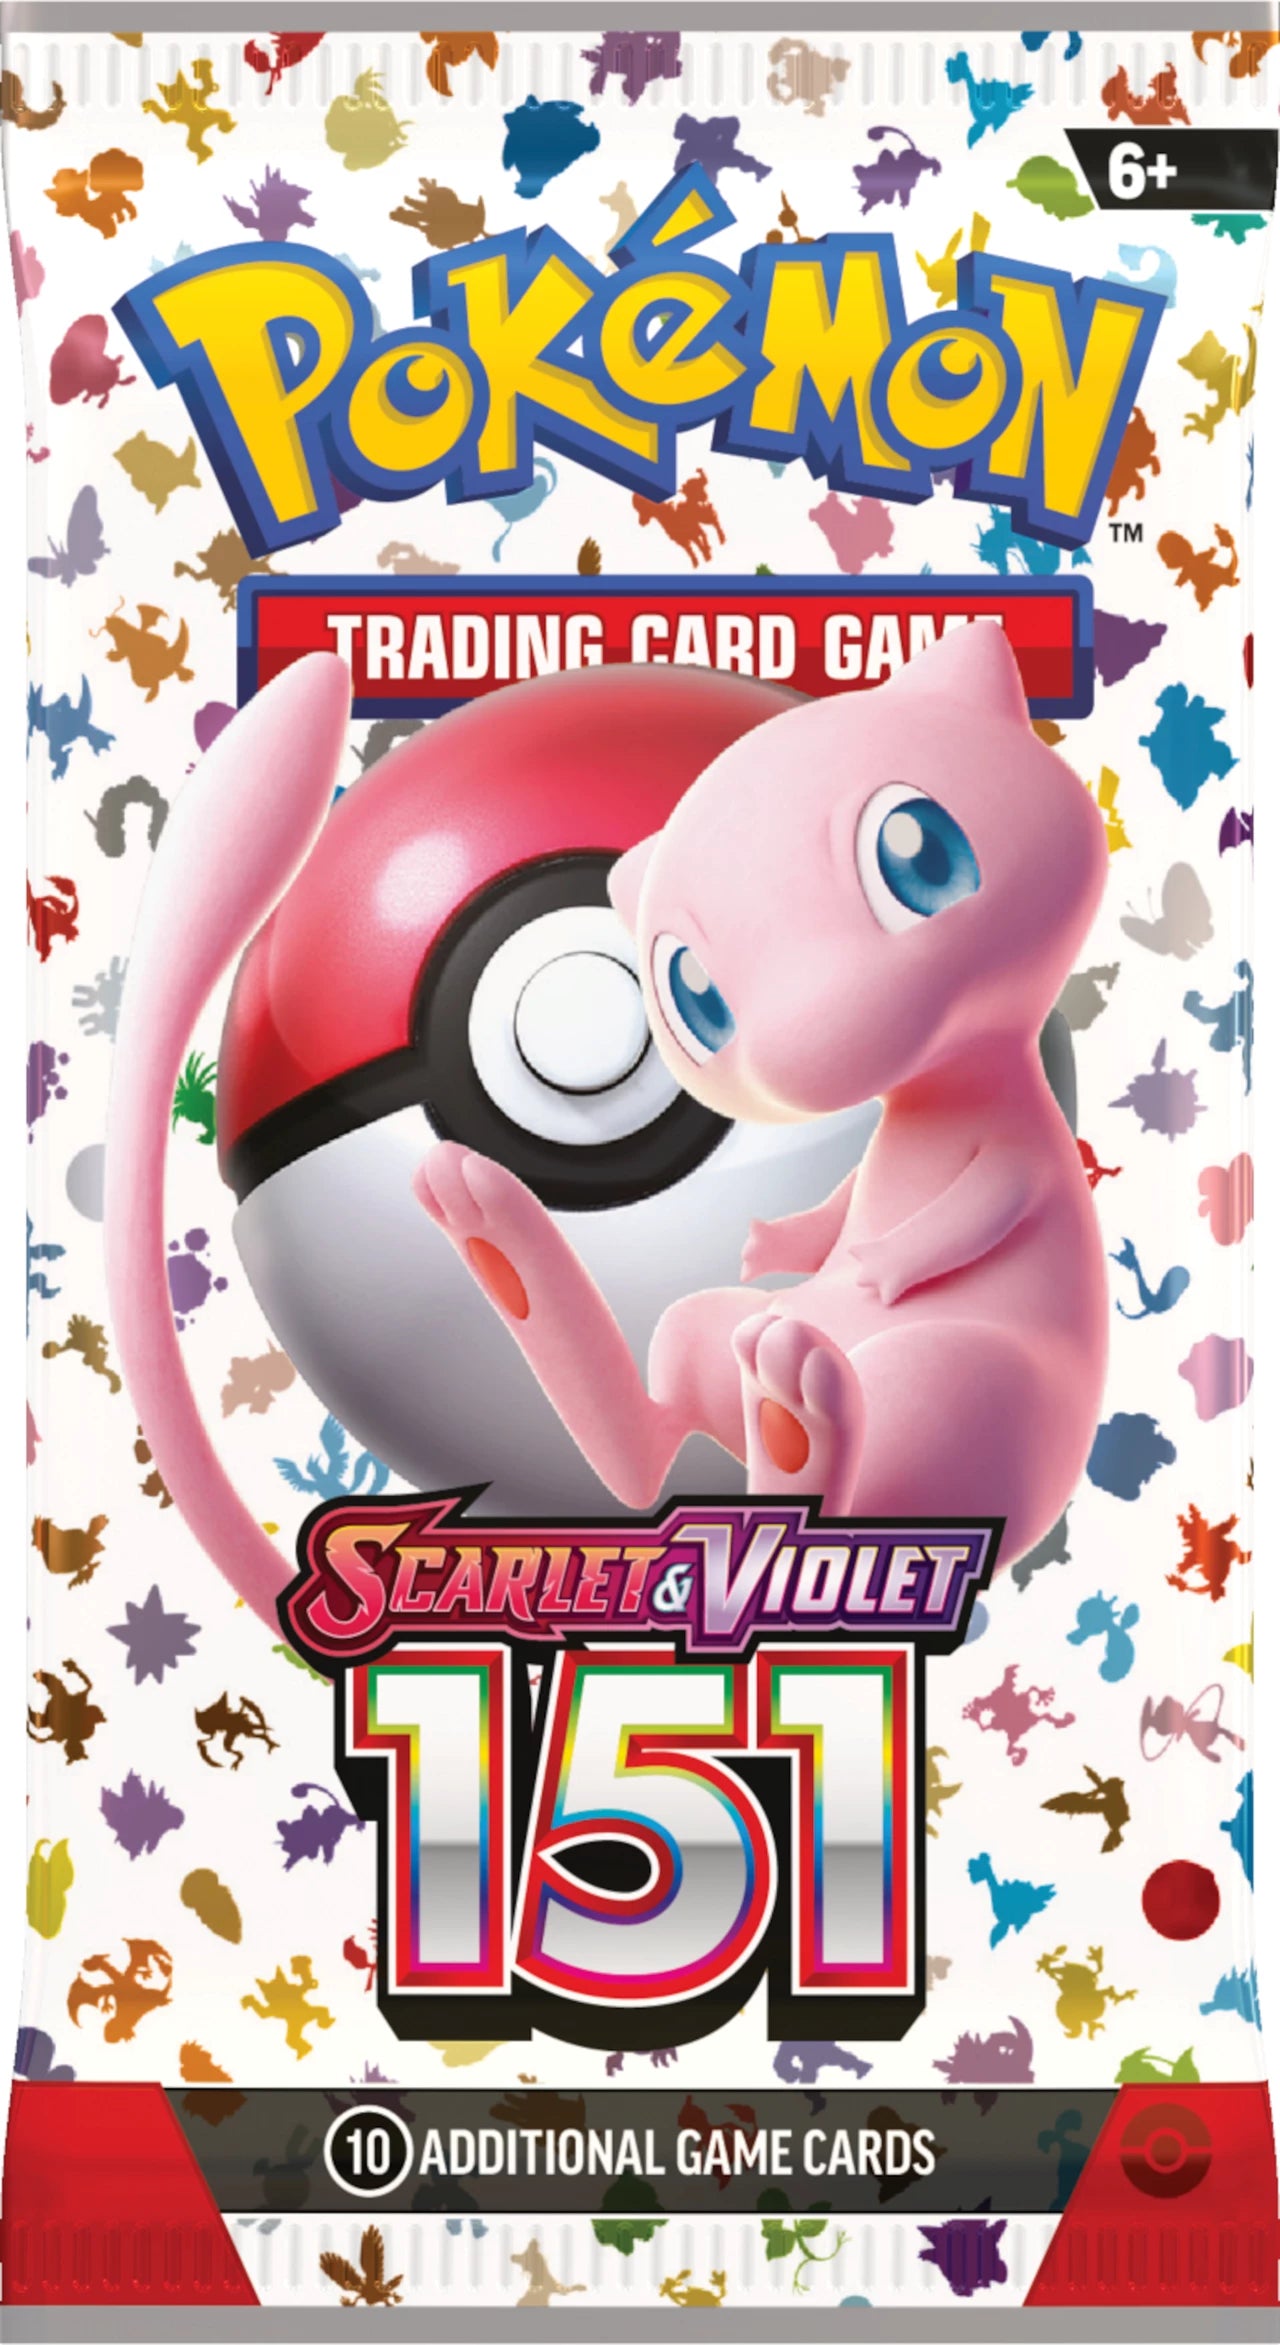 Pokemon TCG Scarlet & Violet 151 Booster Pack (1 Pack) - stylecreep.com